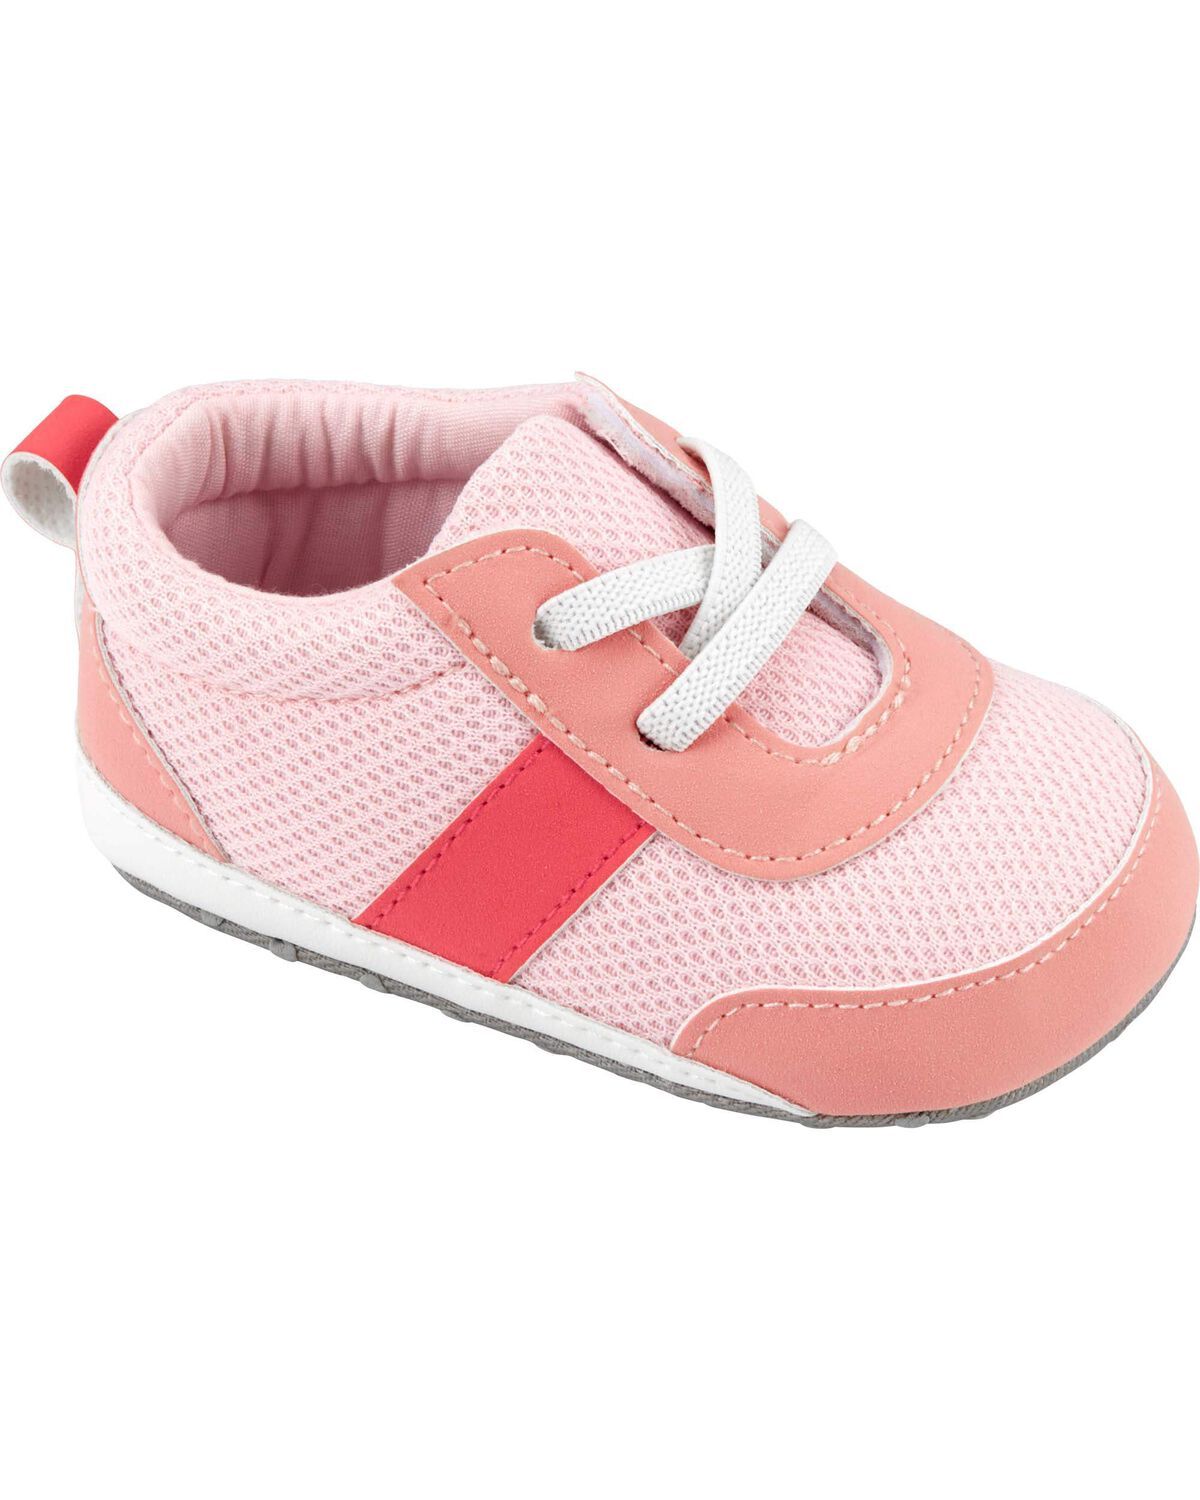 Baby Sneaker Shoes | Carter's